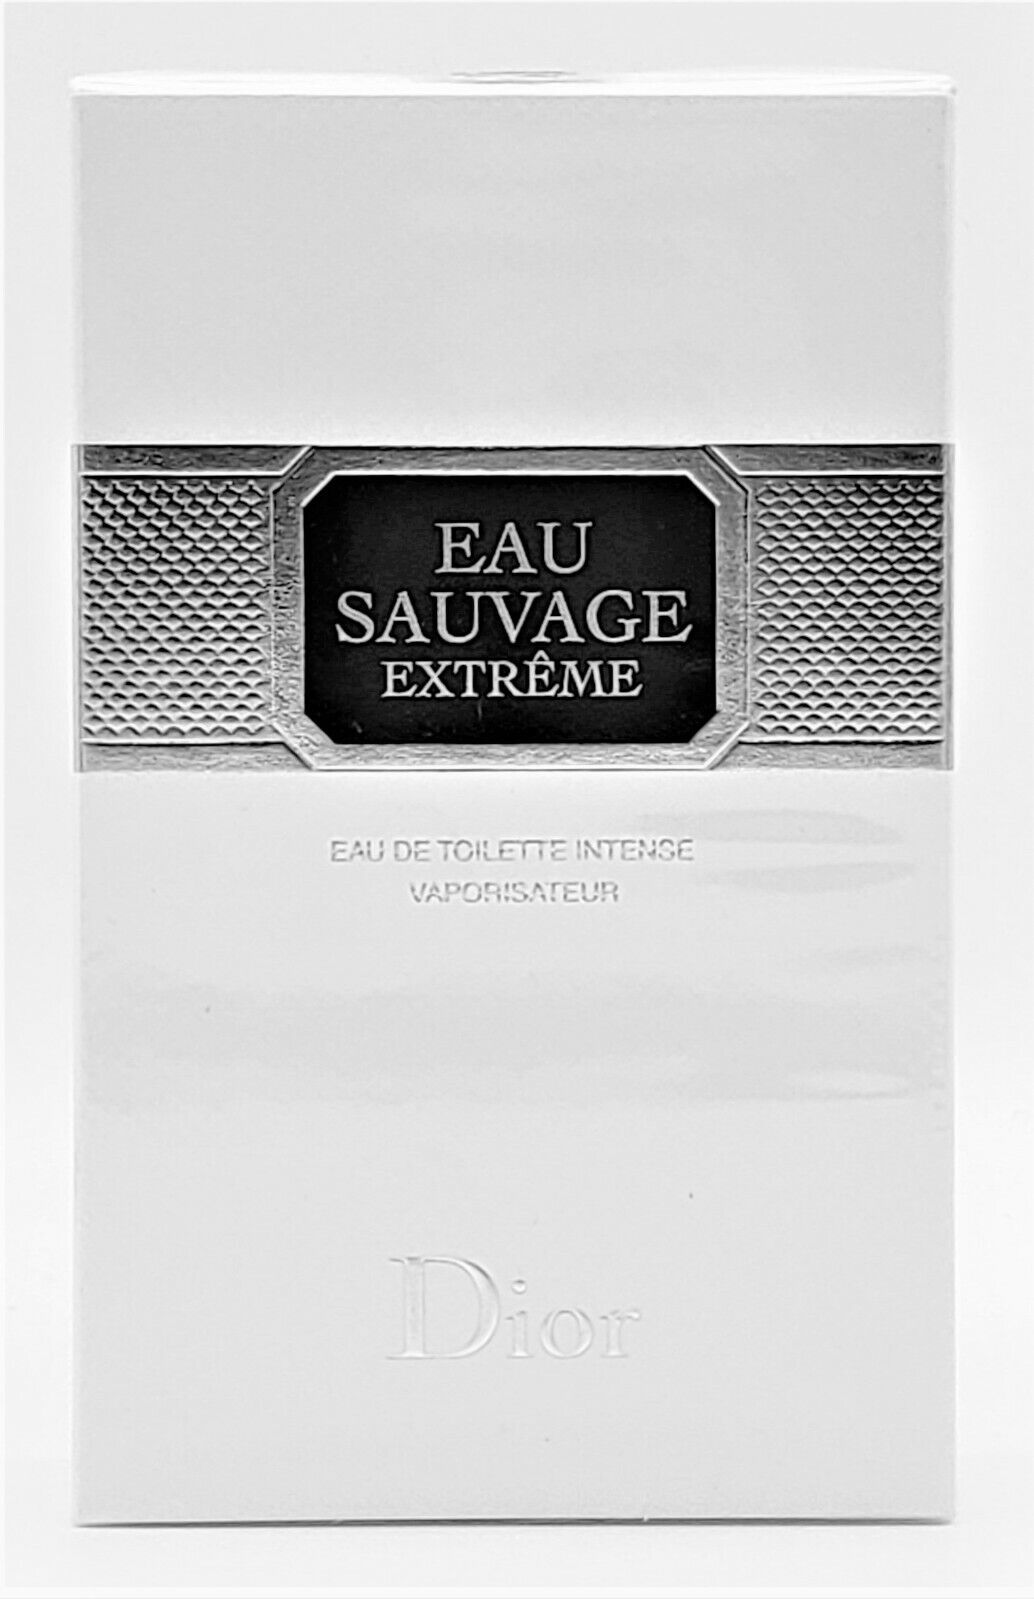 Eau Sauvage Extreme Intense Eau de Toilette Spray 3.4 oz by Christian Dior